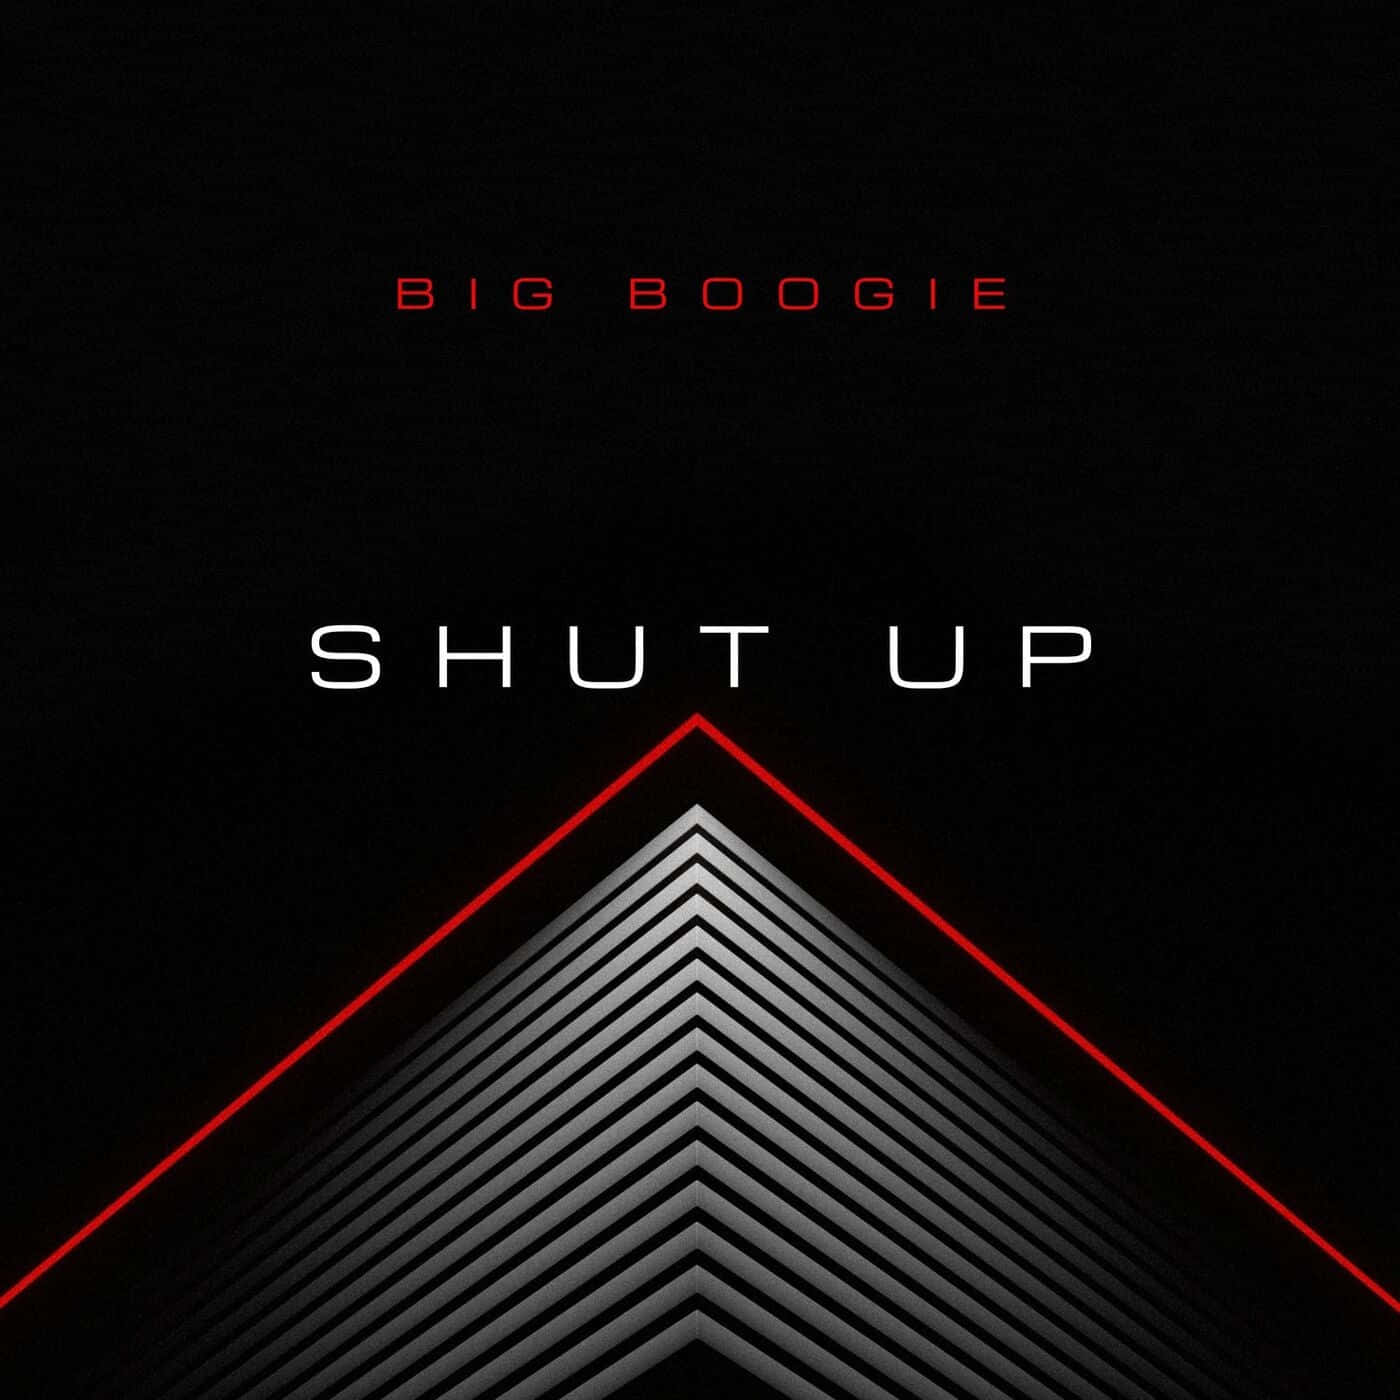 Big Boogie Shut Up Album Cover Wallpaper